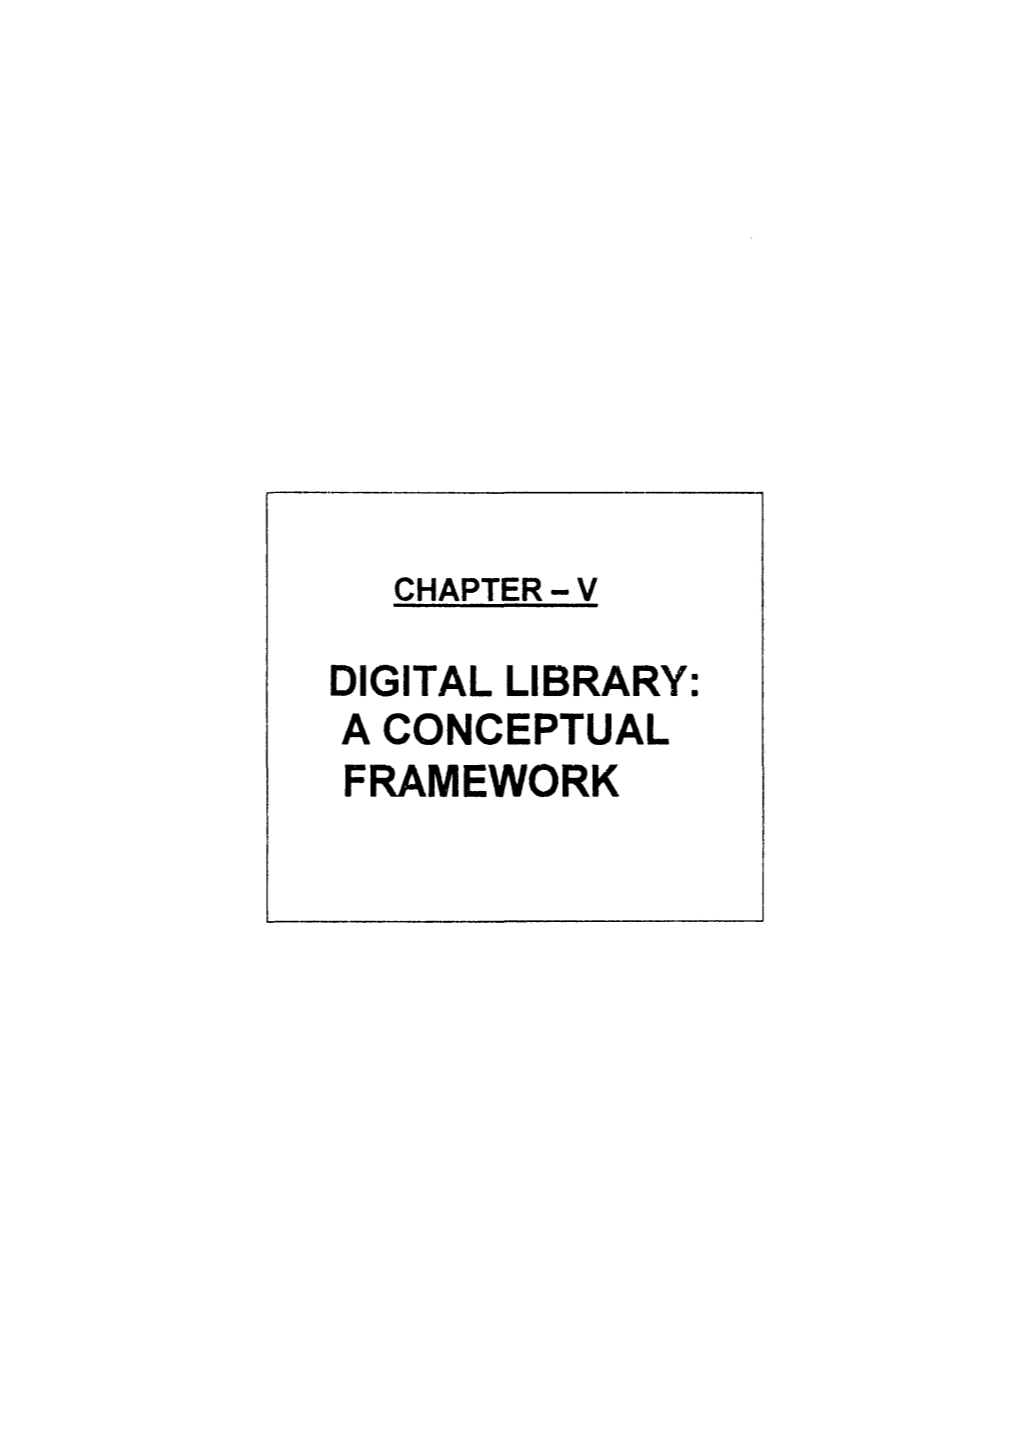 Digital Library; a Conceptual Framework 5.1